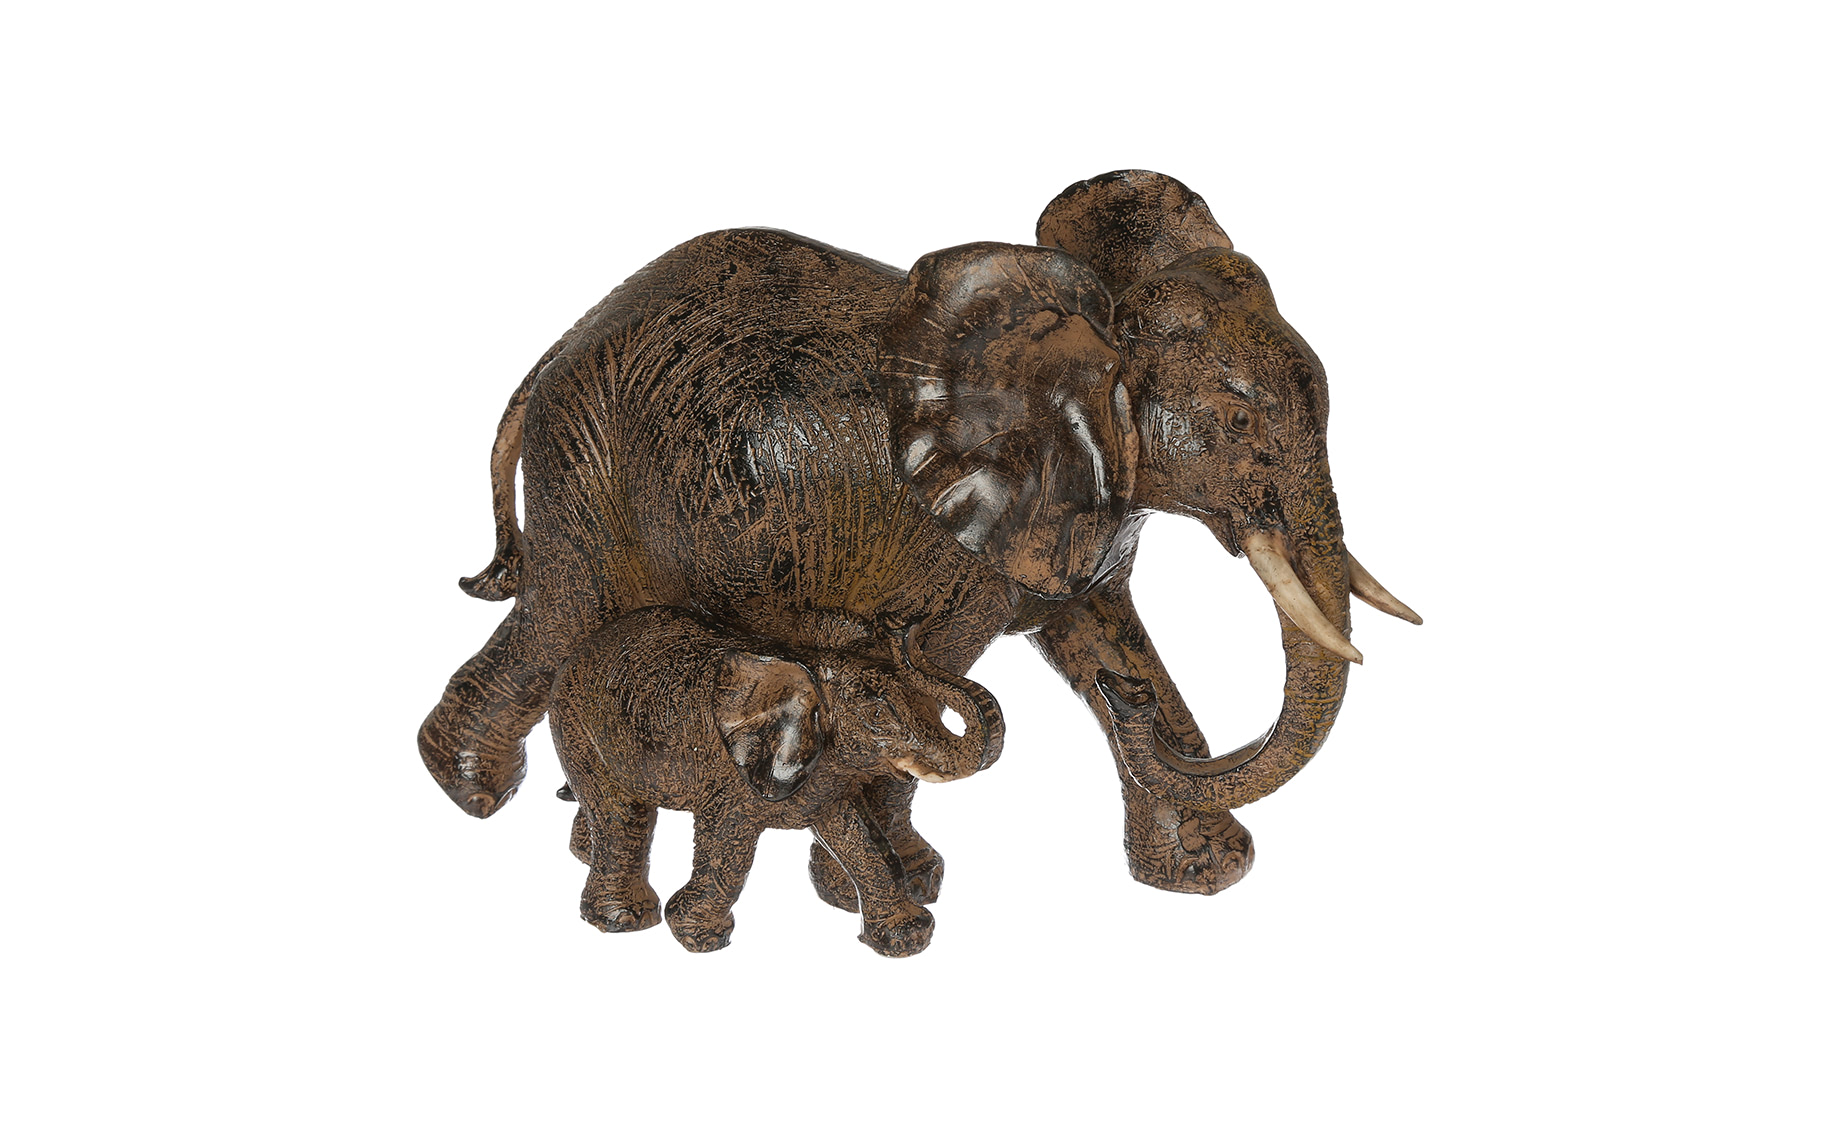 Dekoracija Elephants 22,5x12x15,5cm više boja